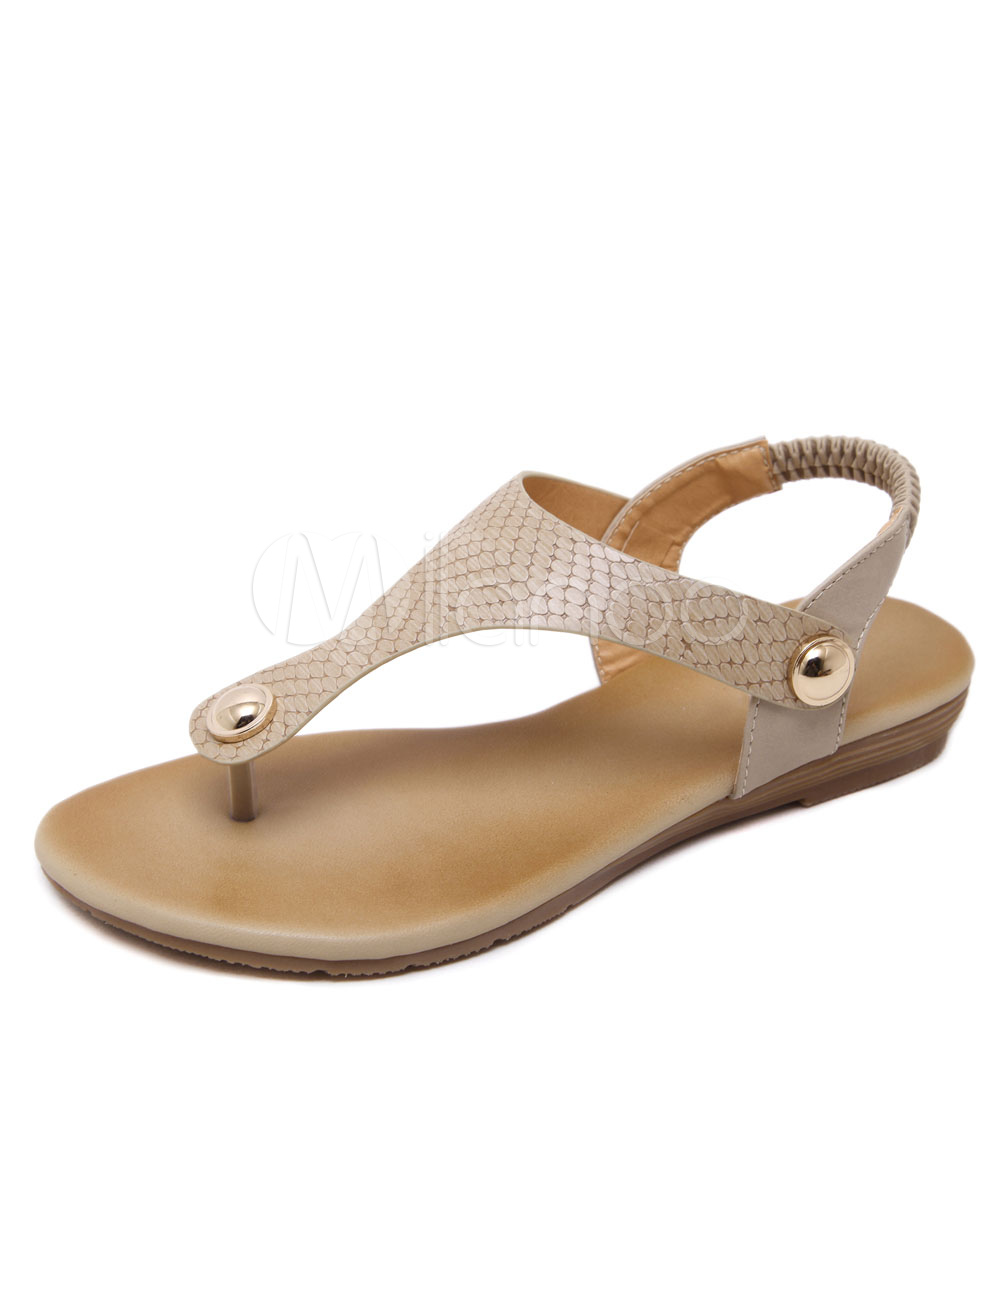 Apricot Thong Sandals Women's Python Pattern Metallic Detail Slingback ...